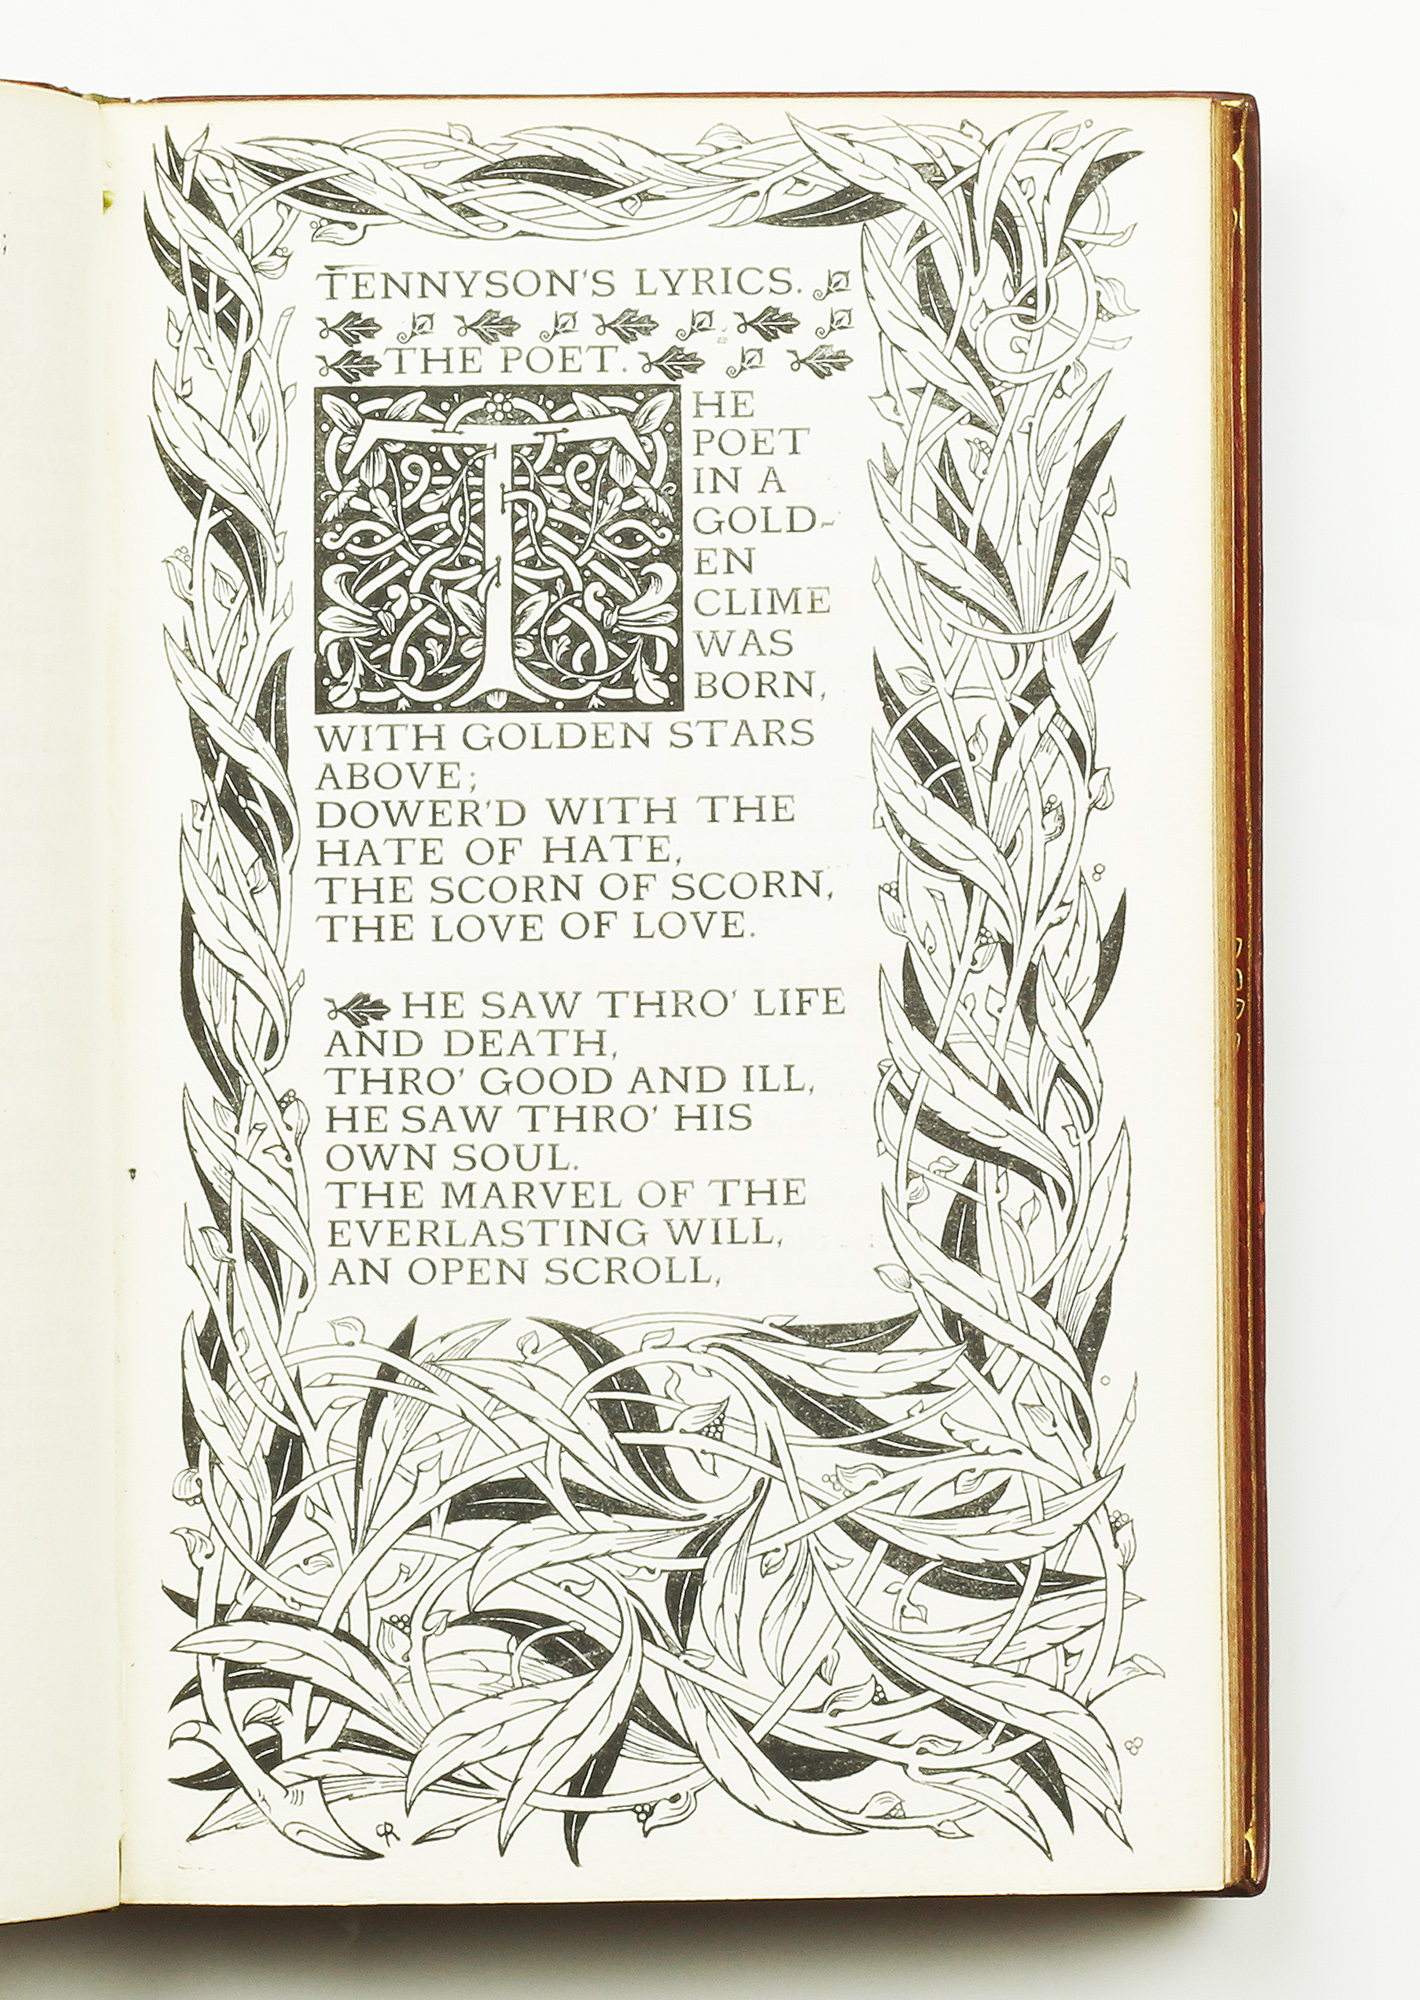 lord tennyson poems